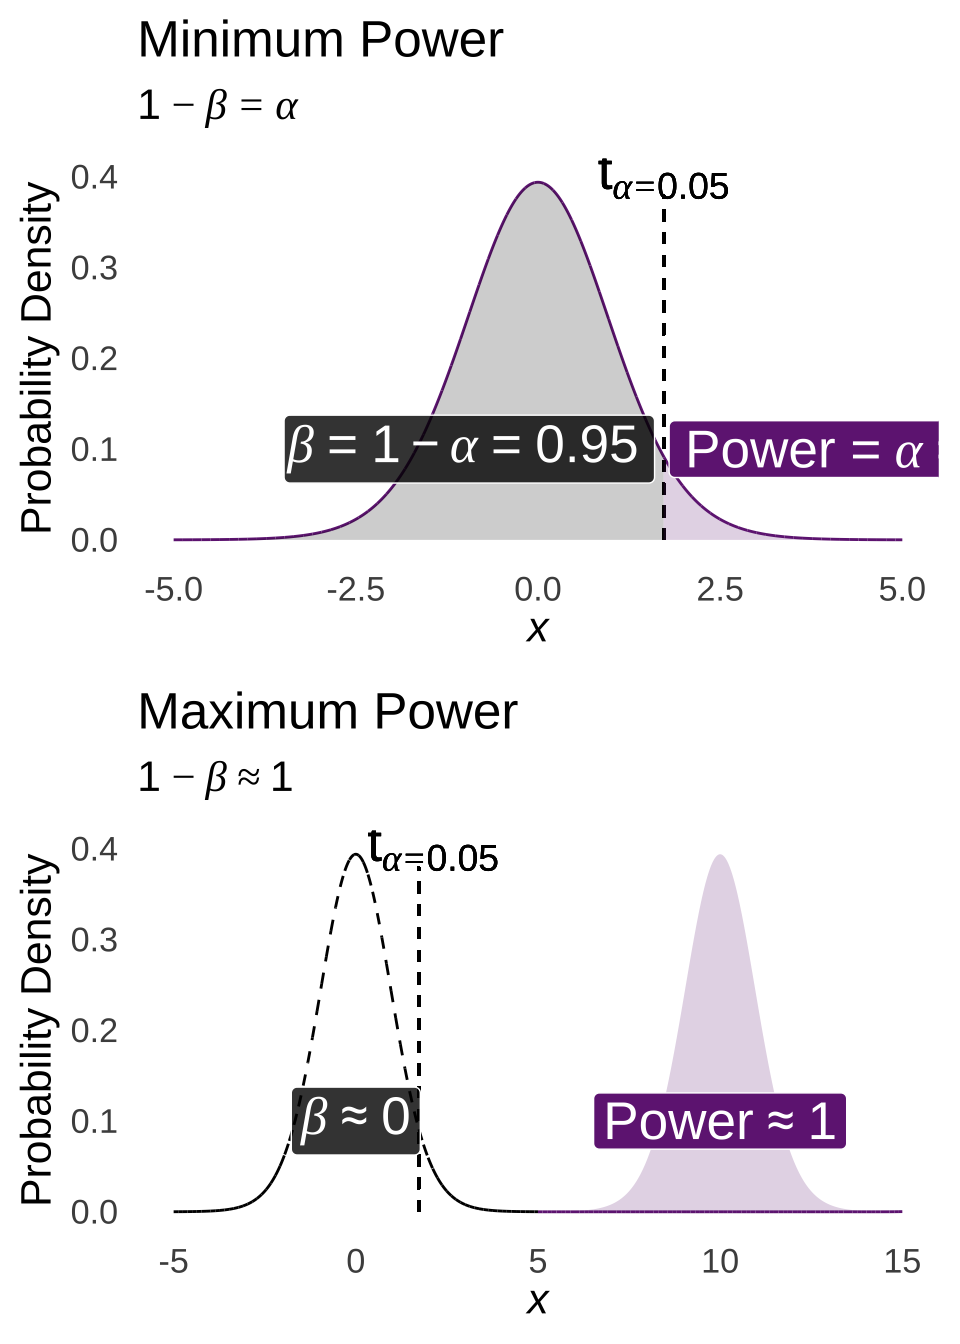 Minimum Power ($\alpha$ and Maximum Power ($\approx 1$)